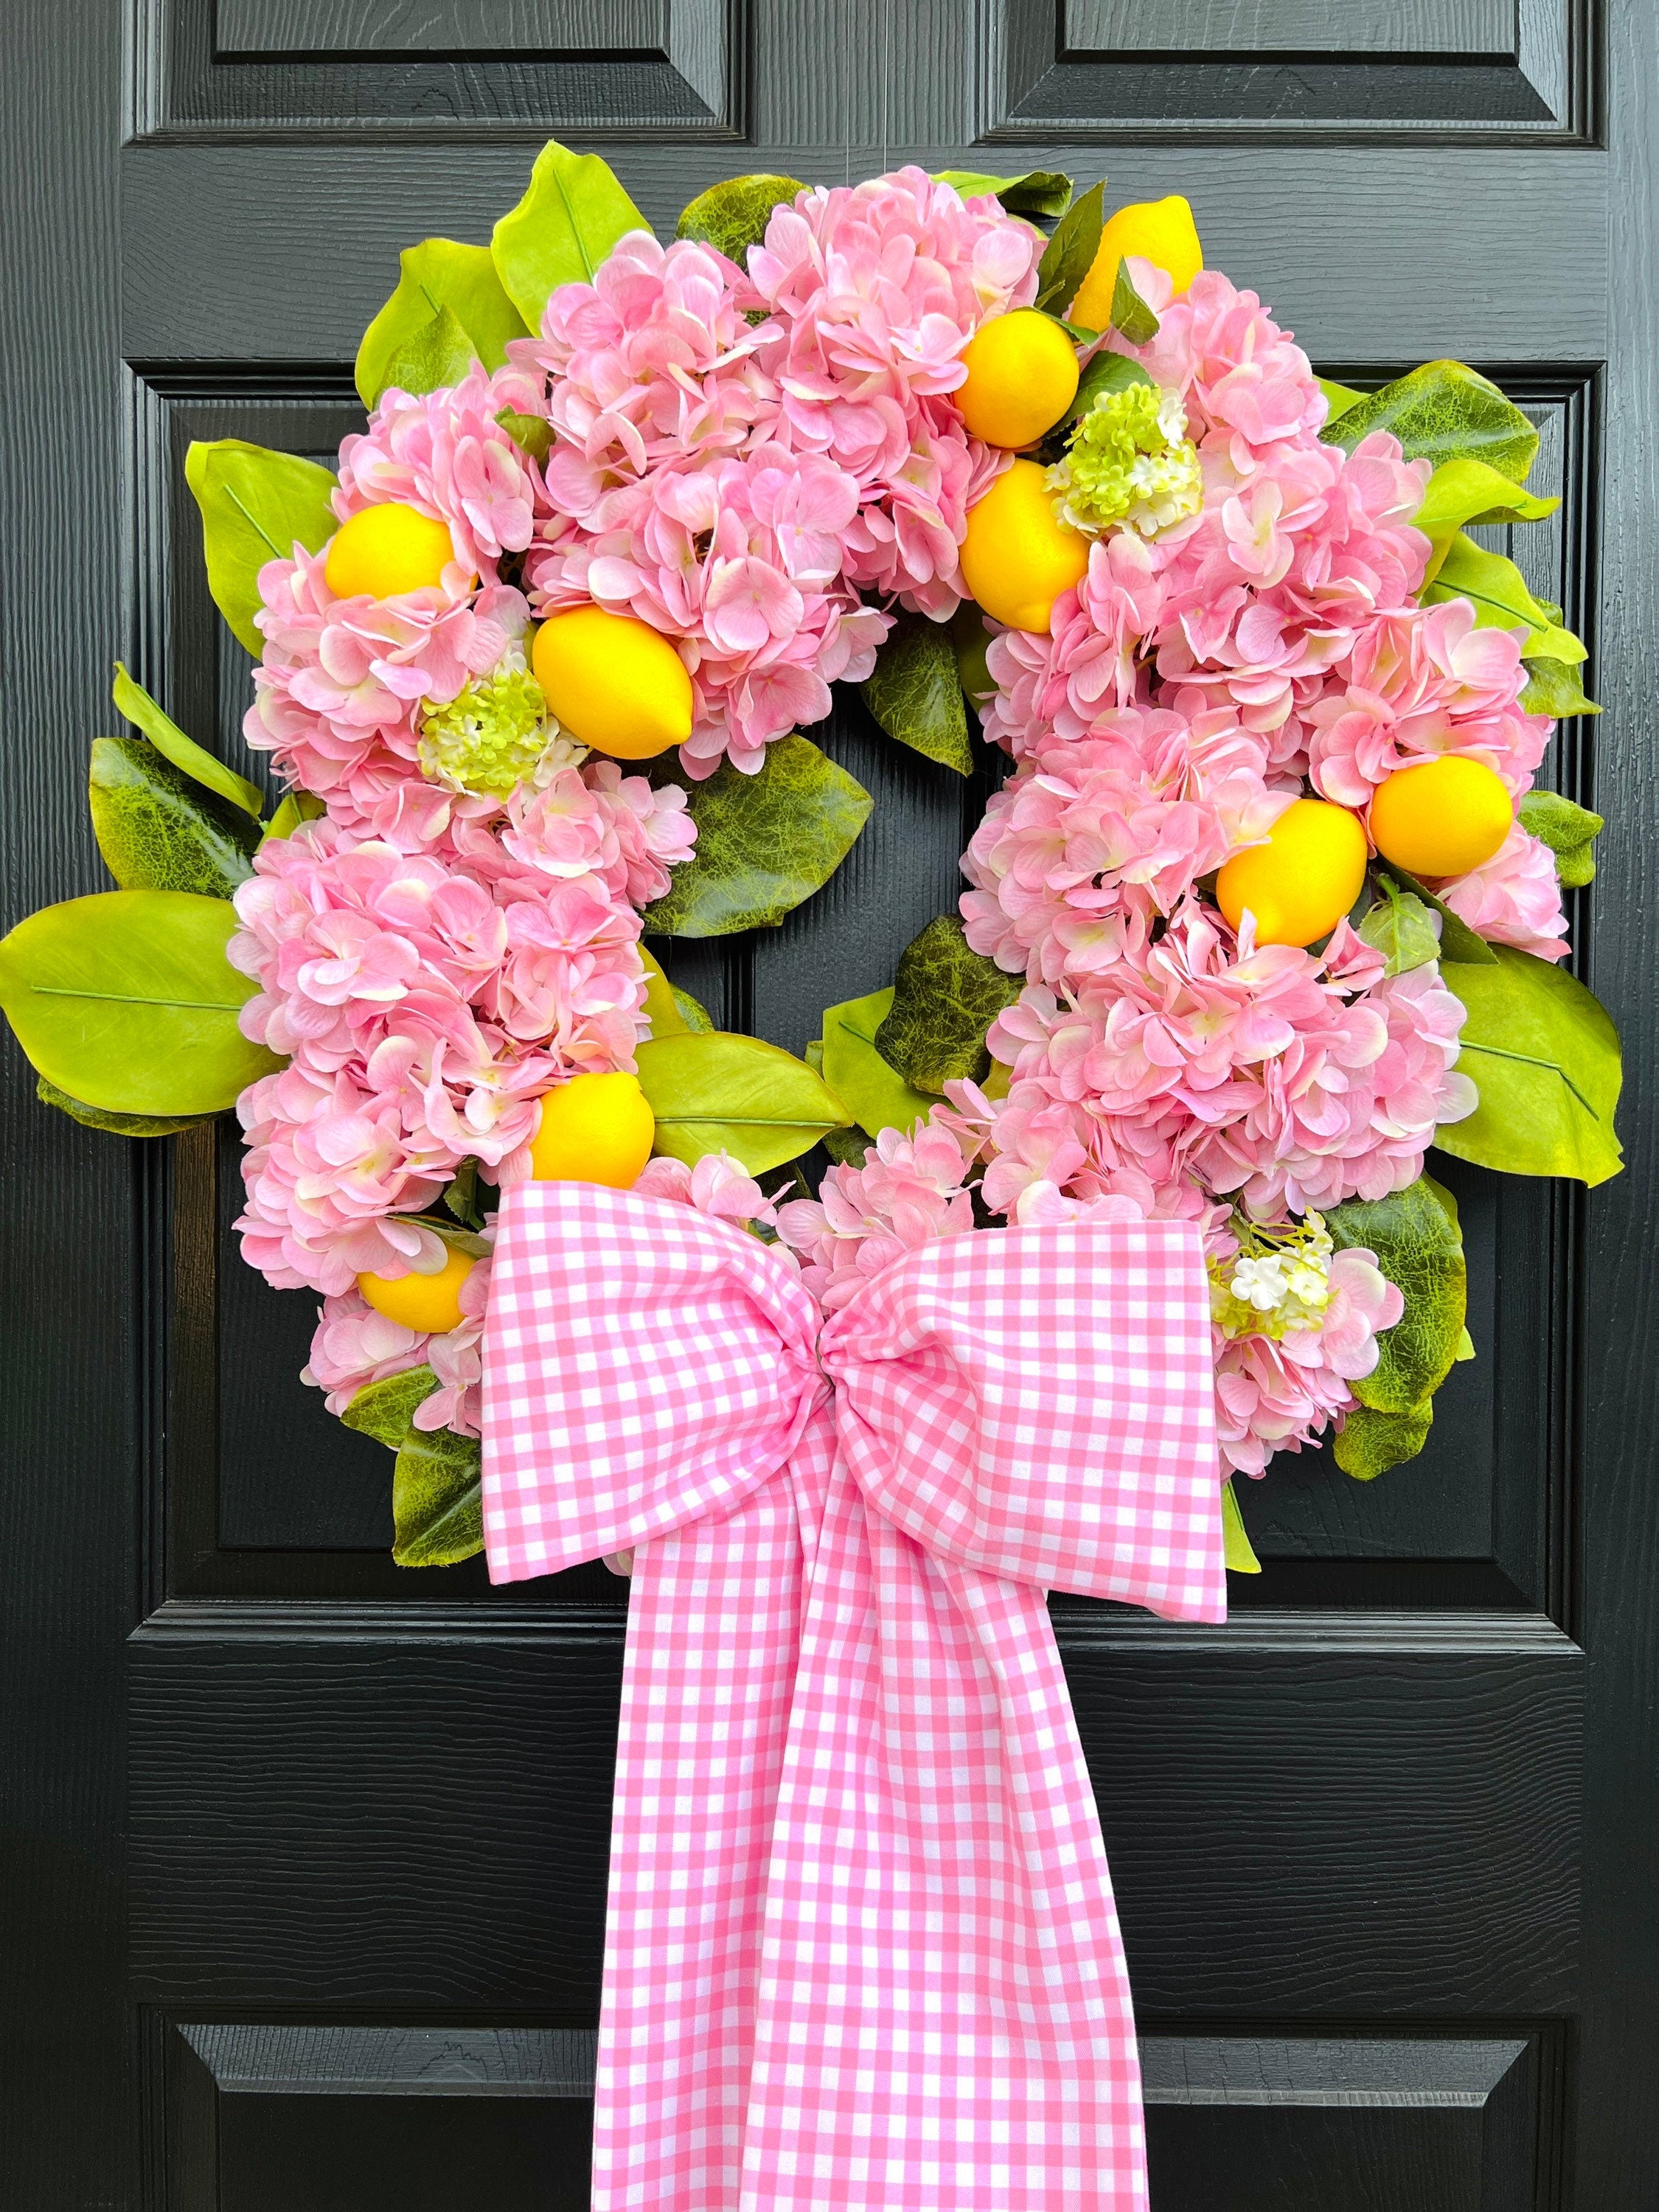 The pink hydrangea and lemon wreath